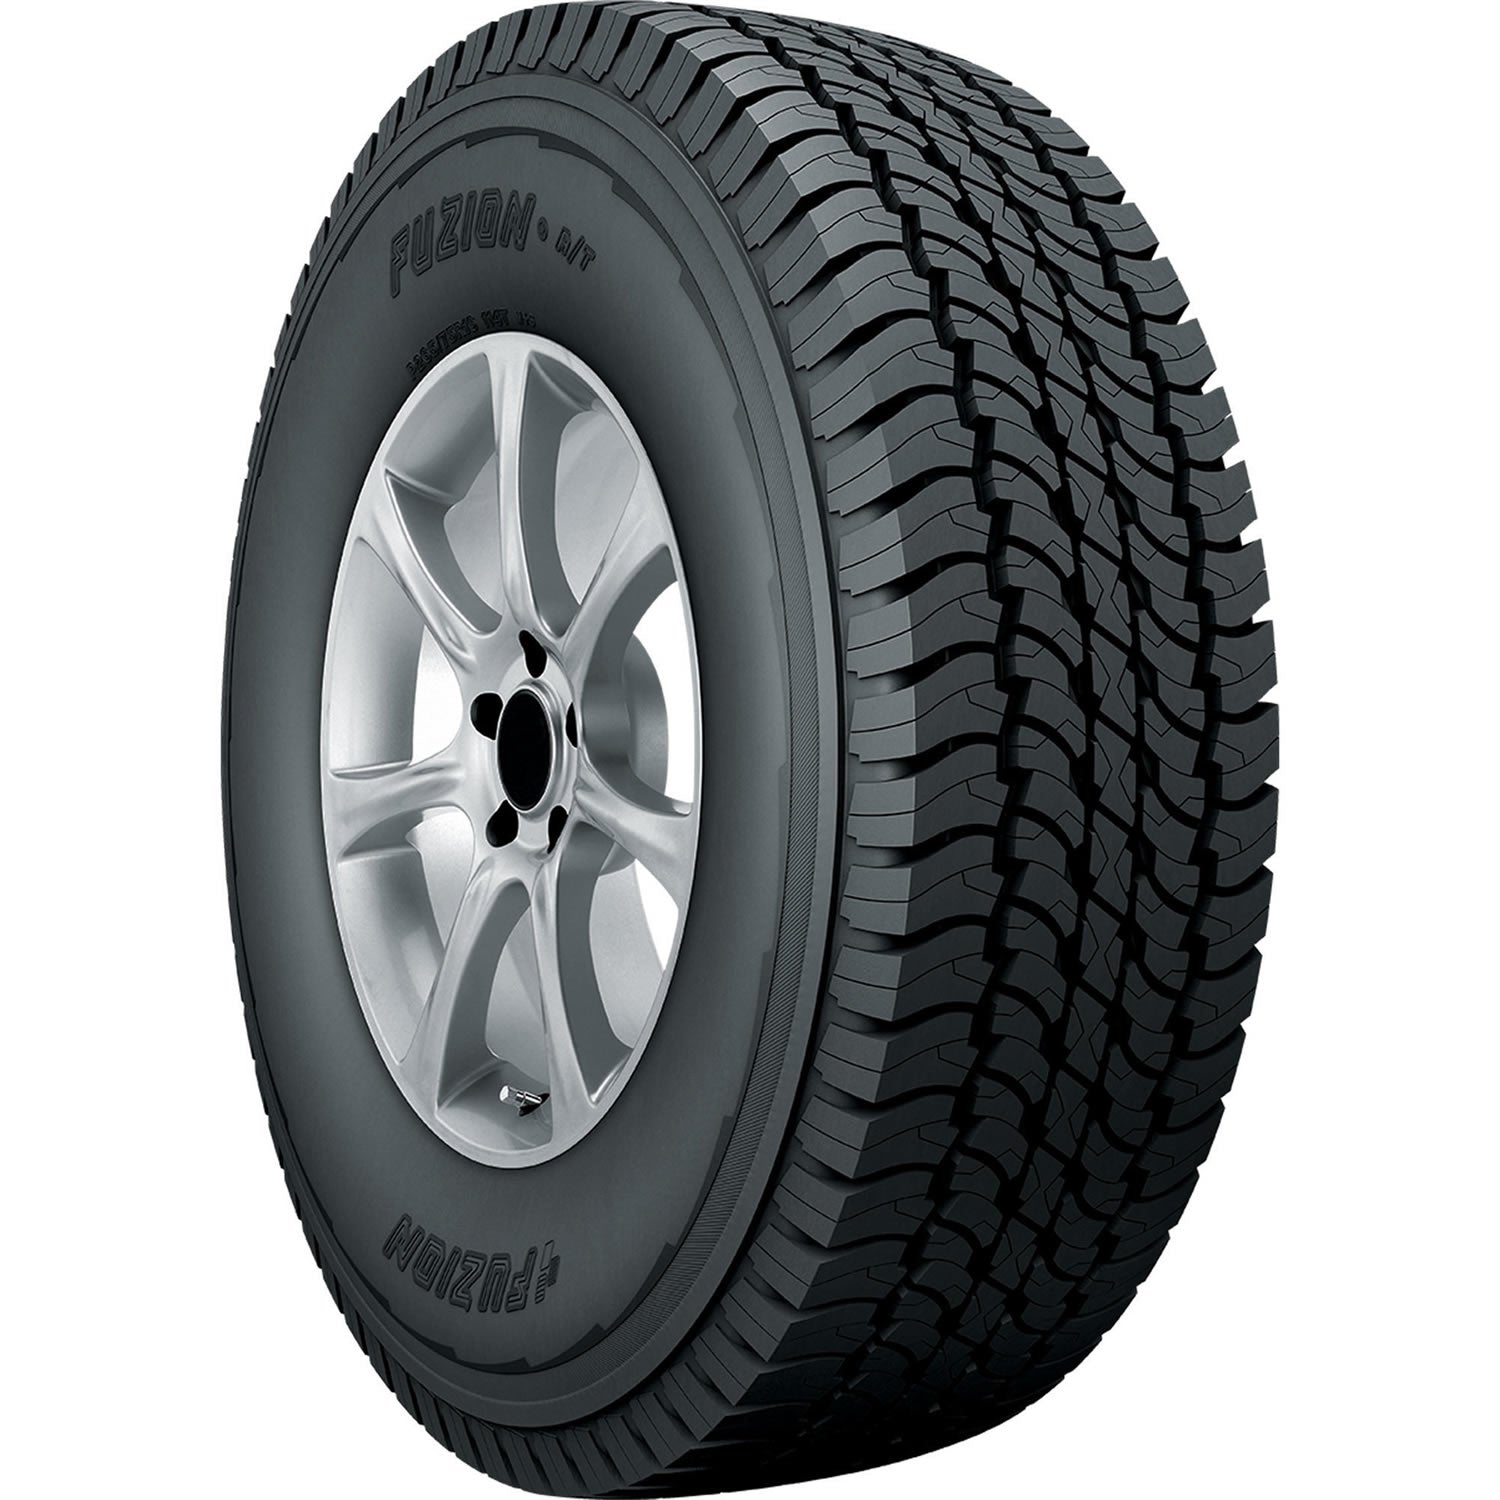 FUZION AT P235/70R16 (29X9.3R 16) Tires